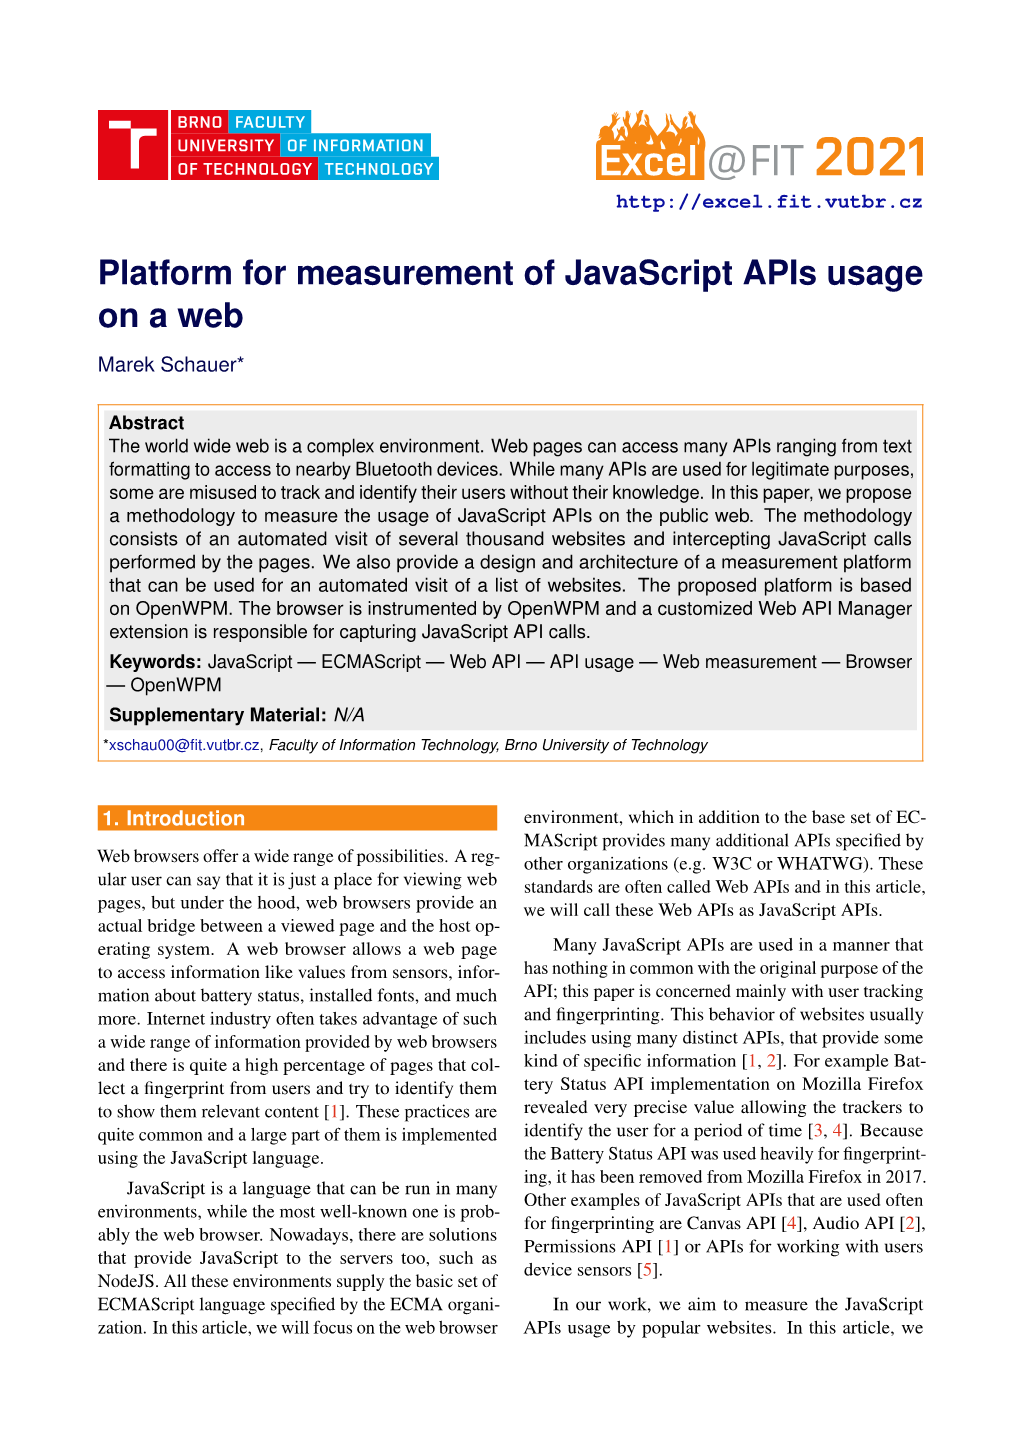 Platform for Measurement of Javascript Apis Usage on a Web